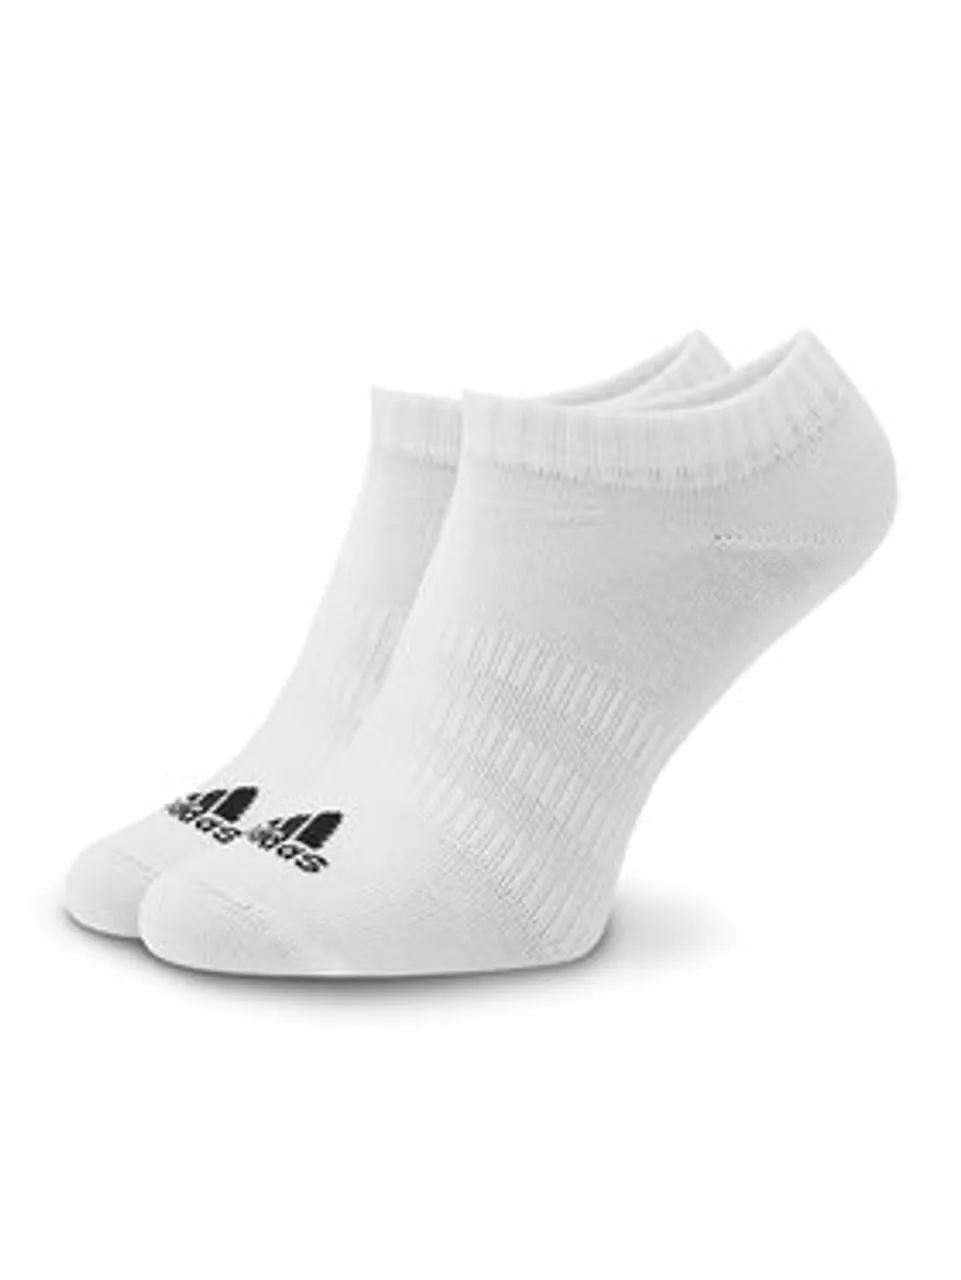 Adidas Thin and Light Sportswear Low-Cut Socken, 3 Paar IC1337 - Preise  vergleichen